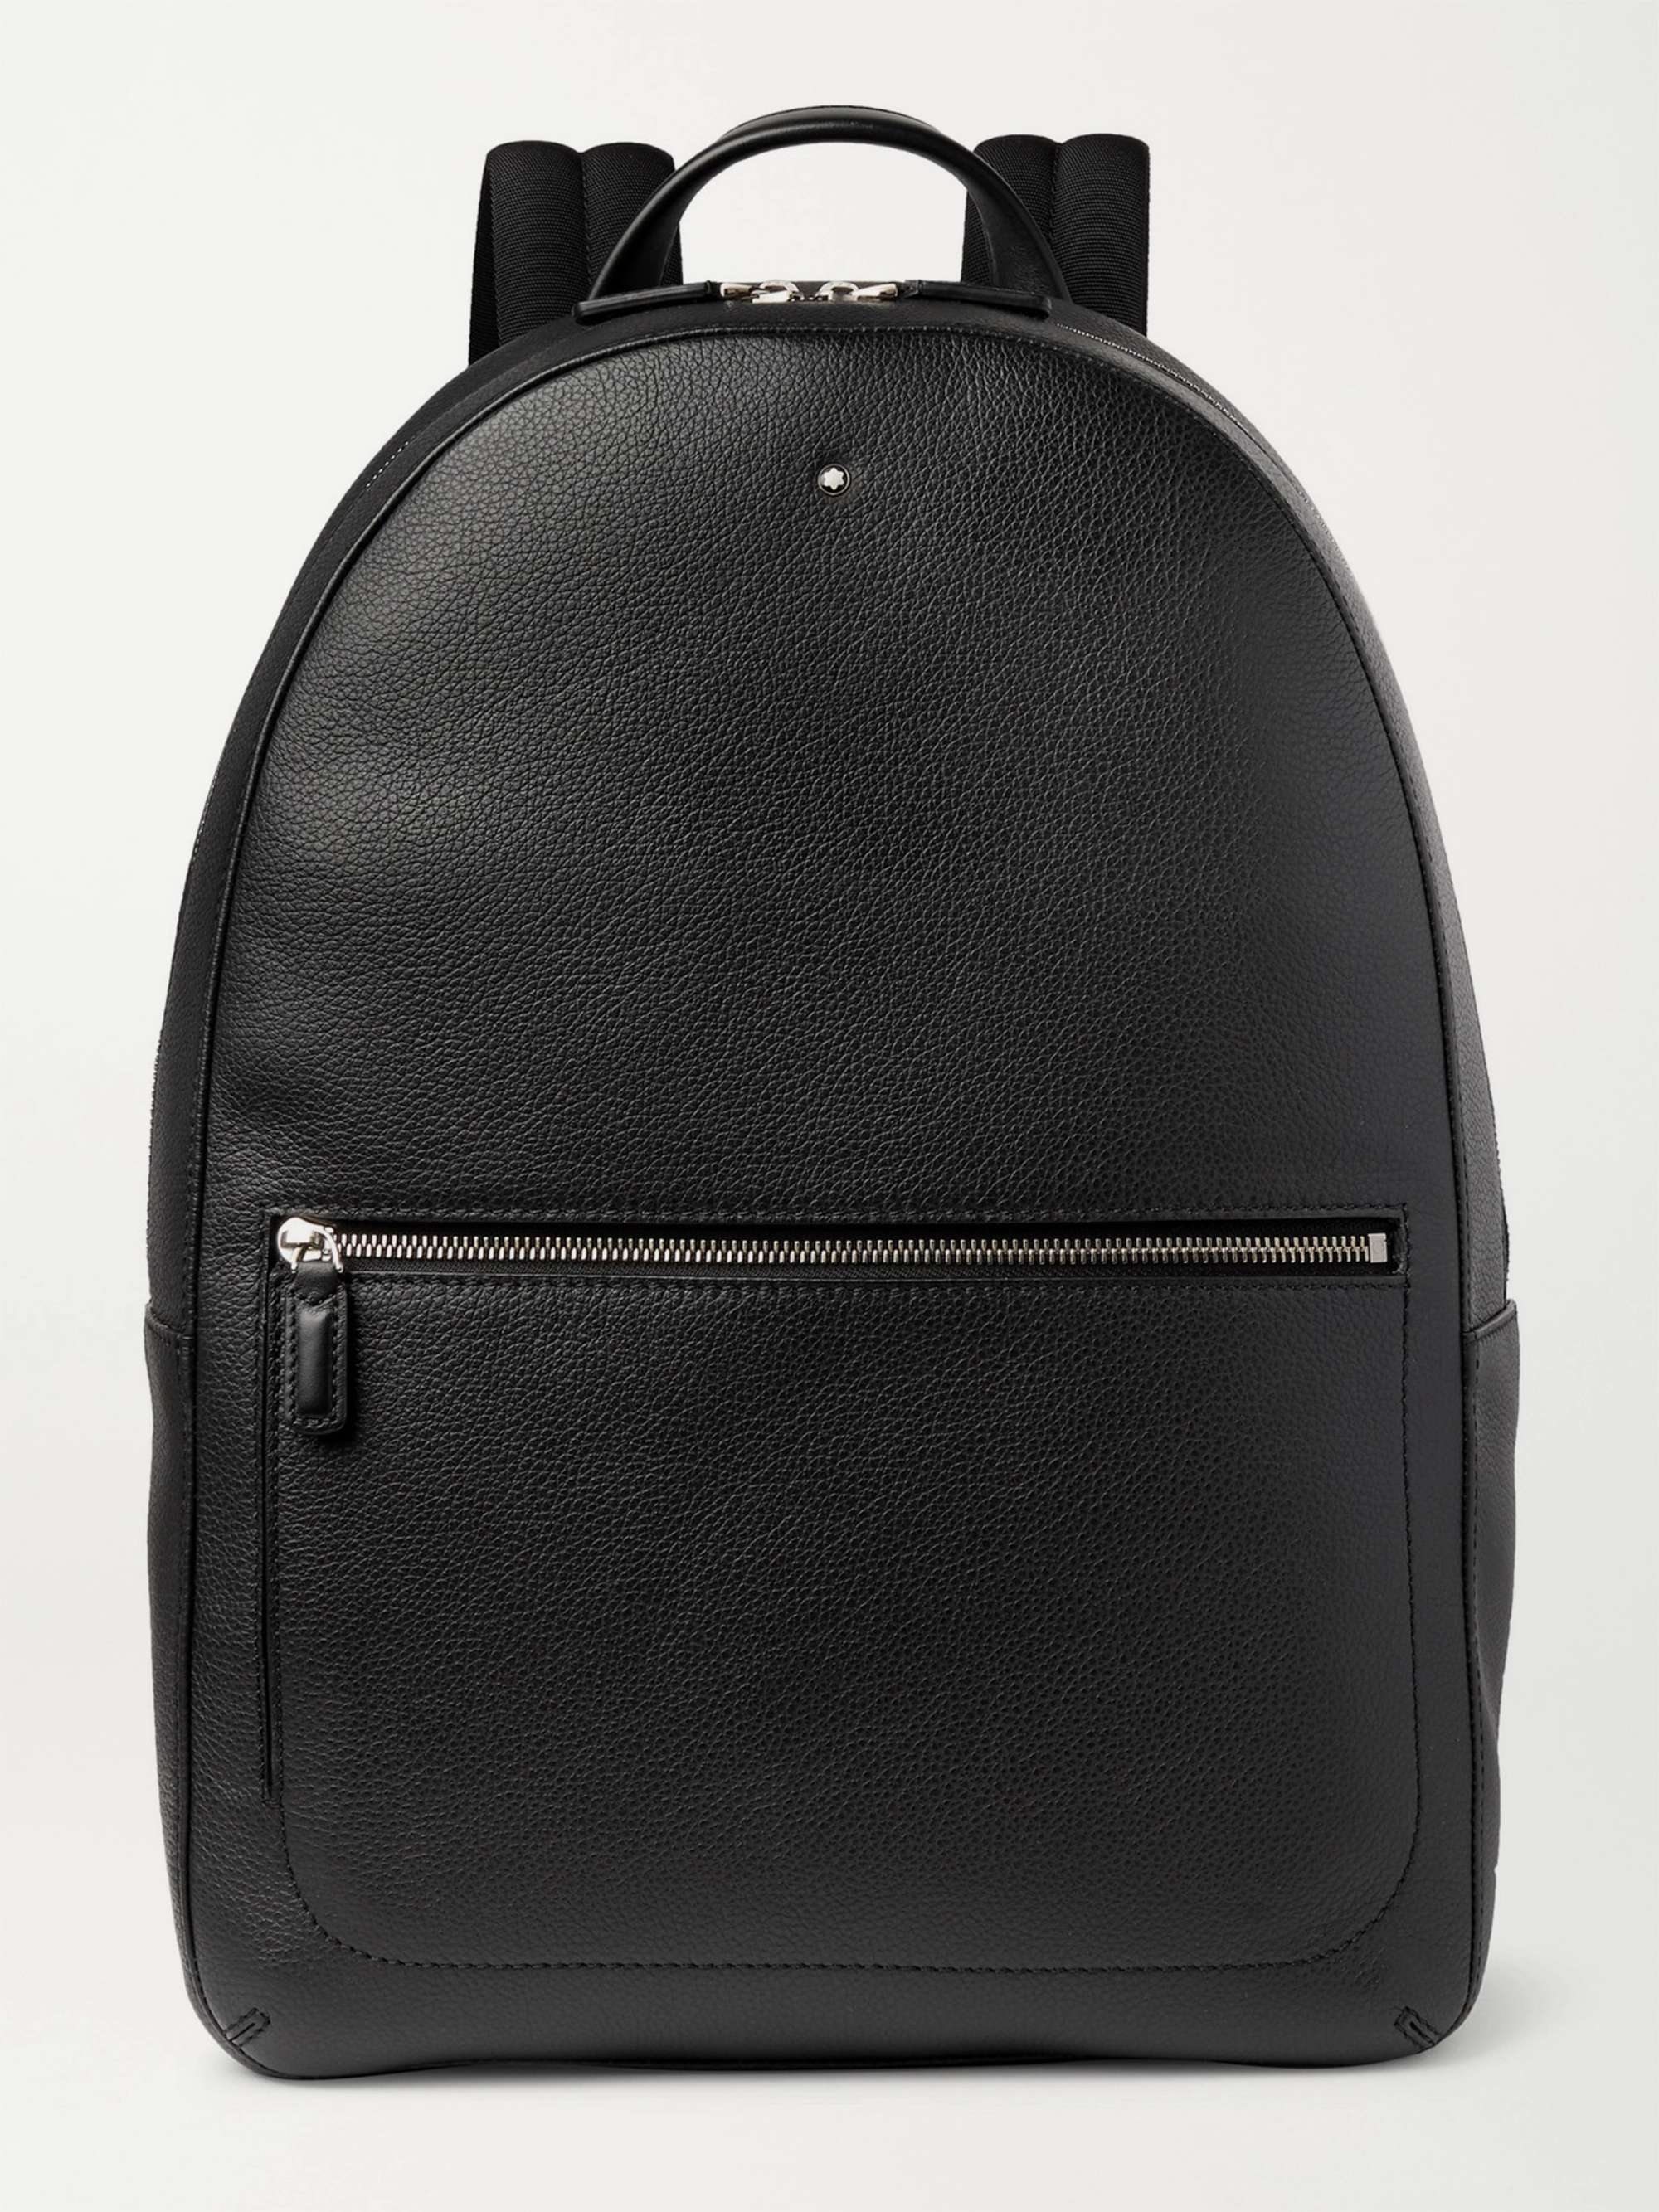 MONTBLANC Full-Grain Leather Backpack